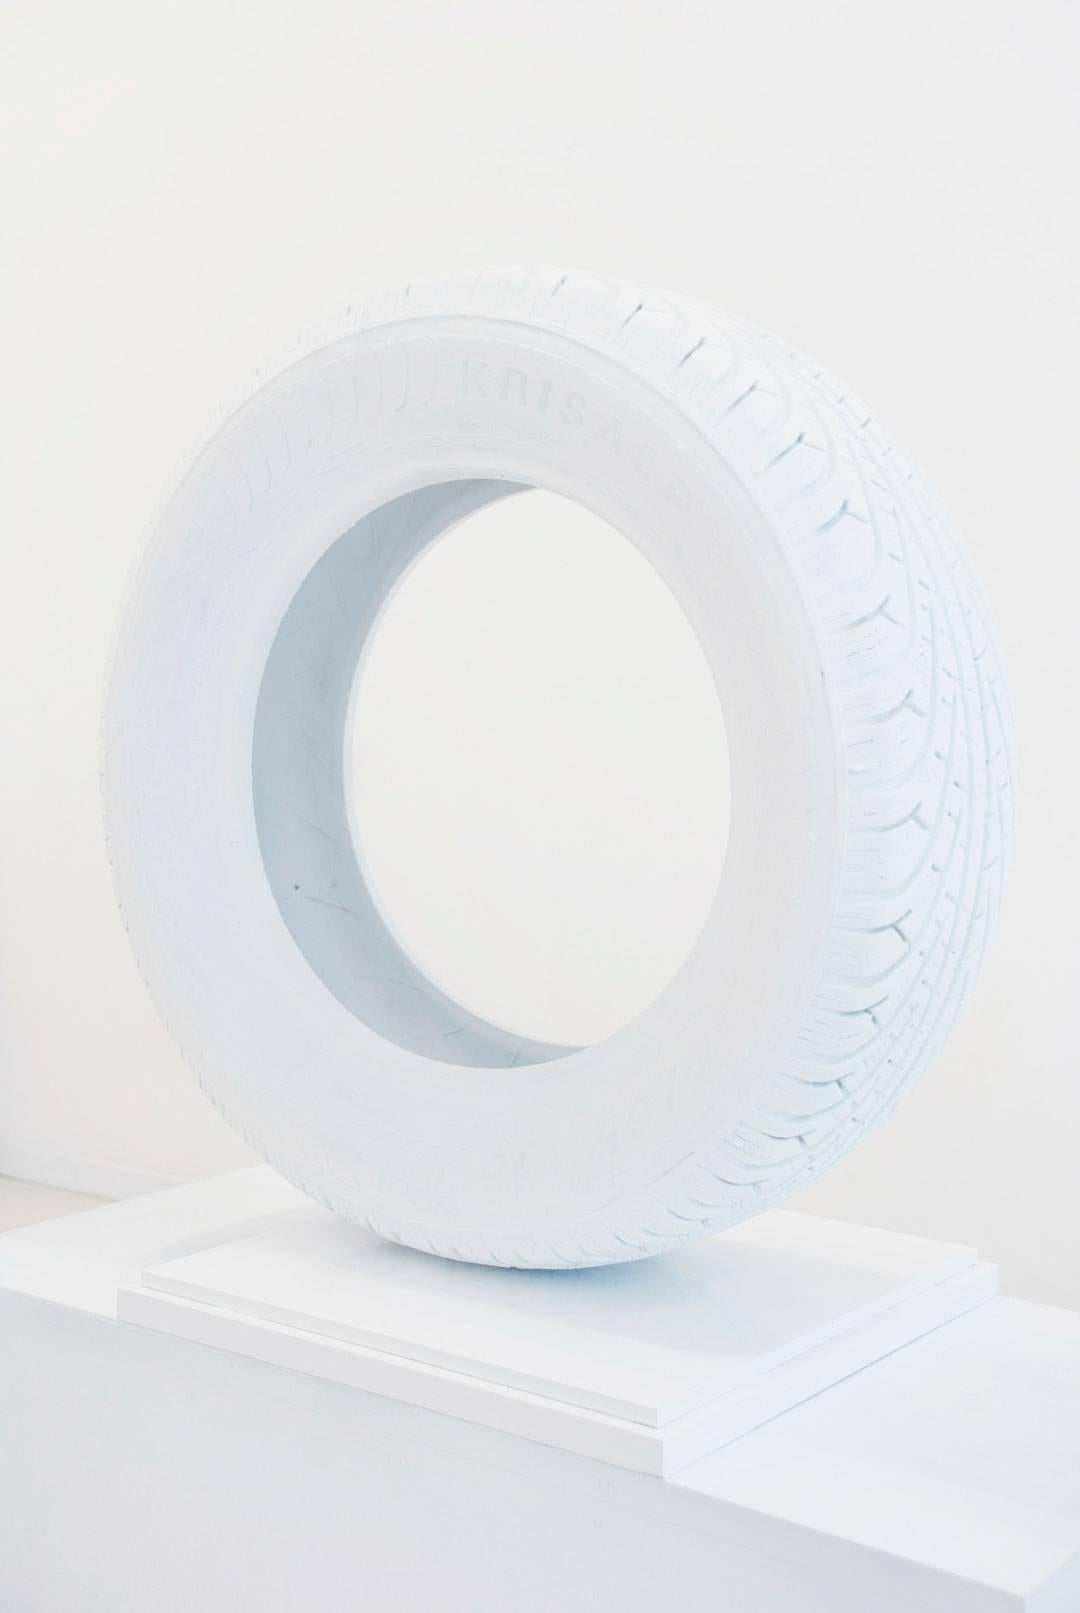 'Spinta Tire' Conceptual Sculpture, Found Object - Gray Figurative Sculpture by Mattia Novello